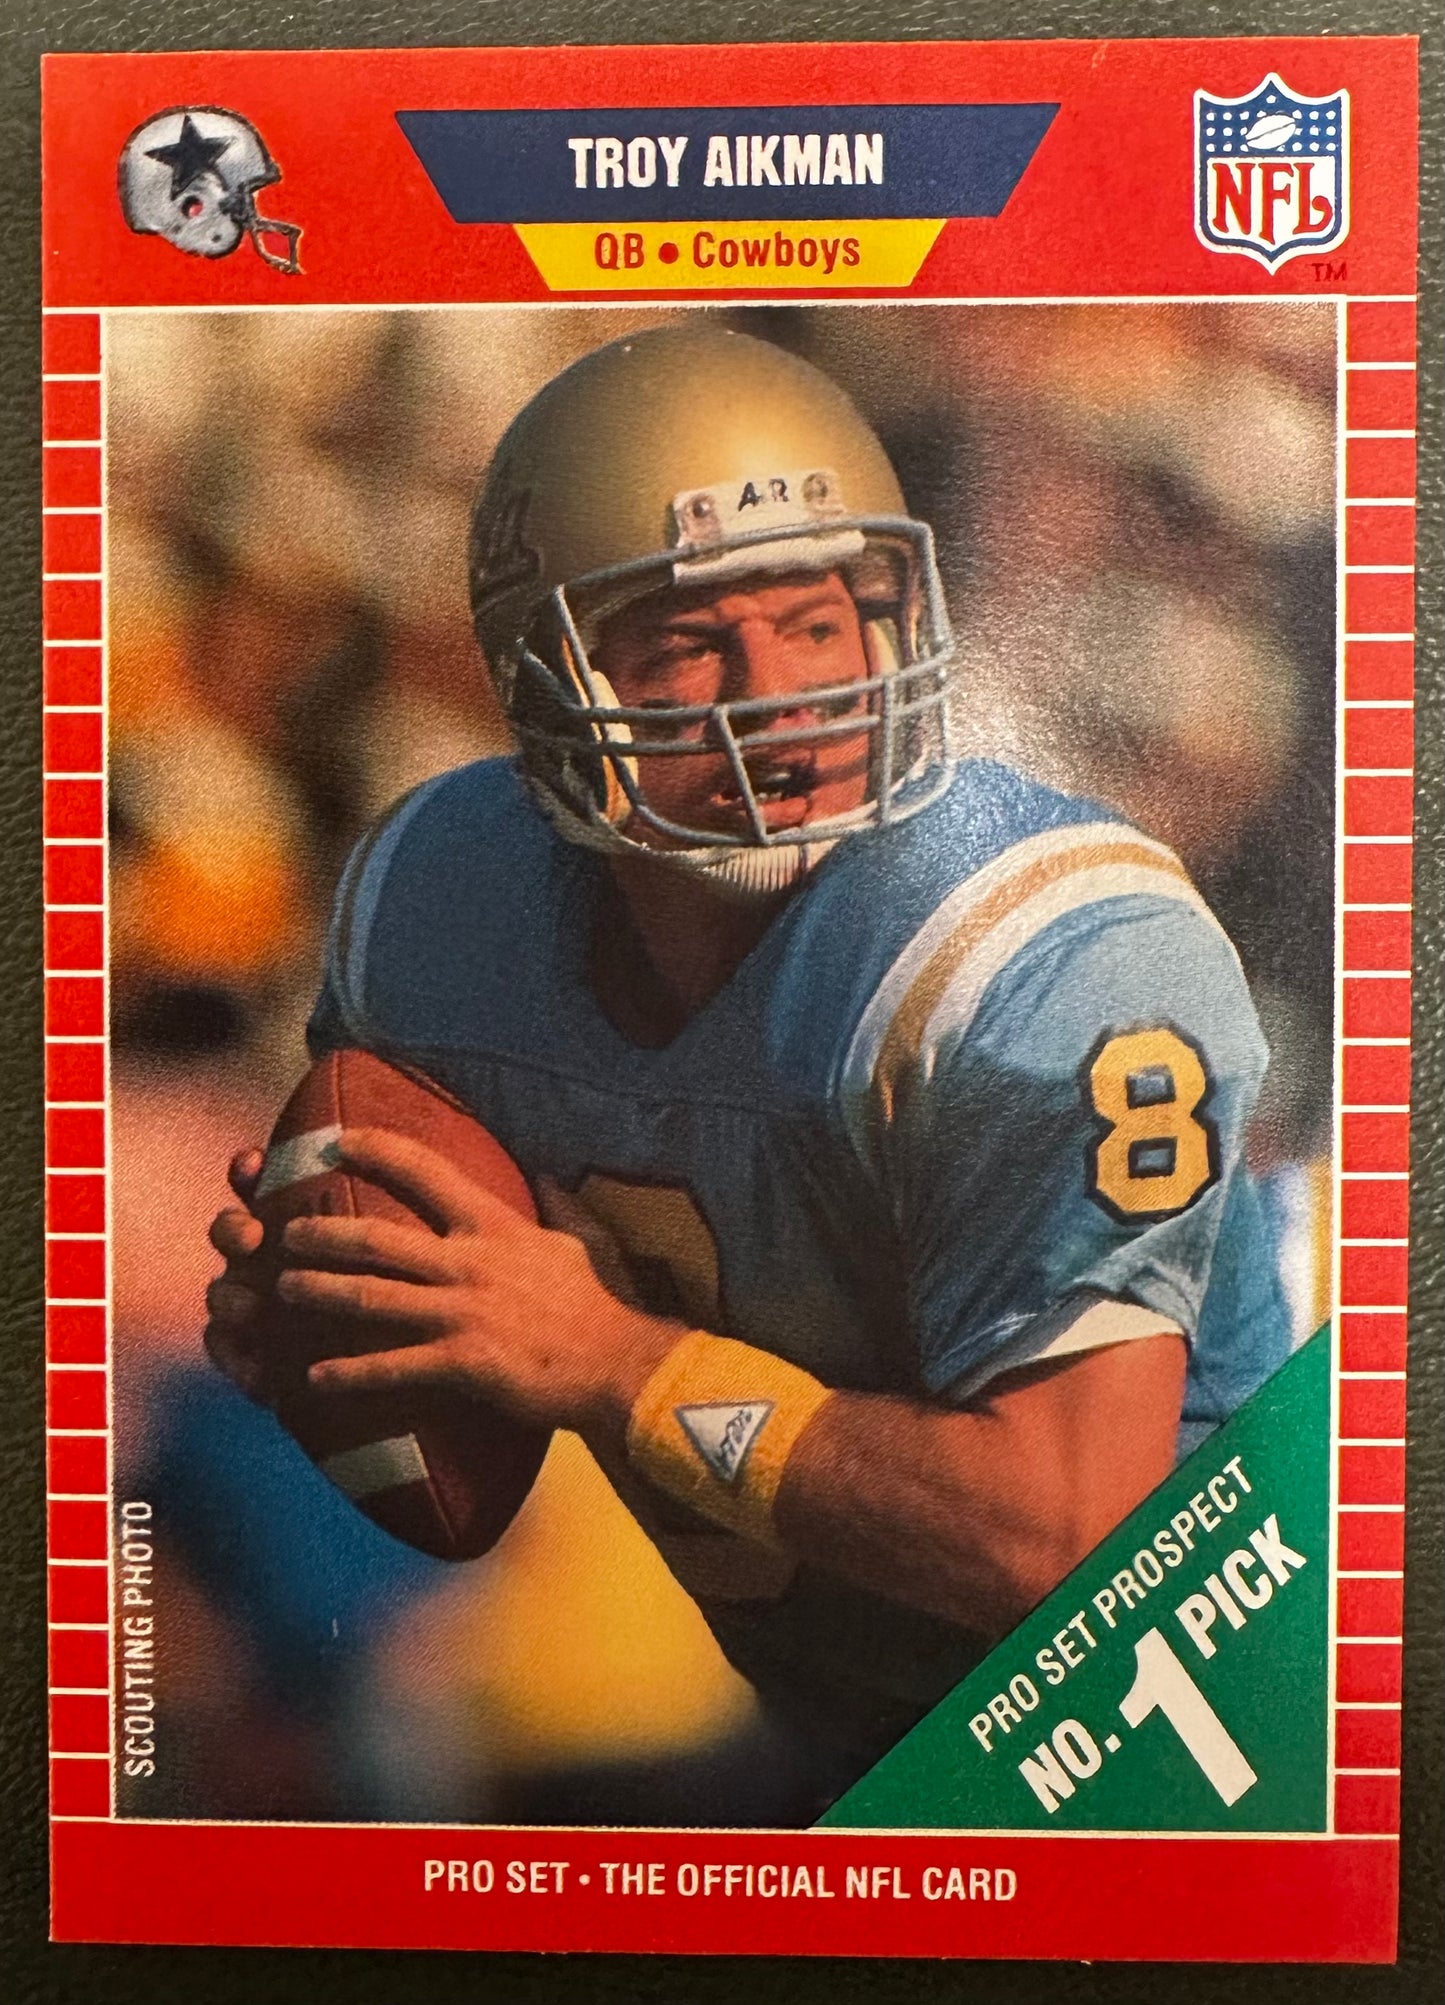 Pro Set 1989 Brett Favre rookie card #490